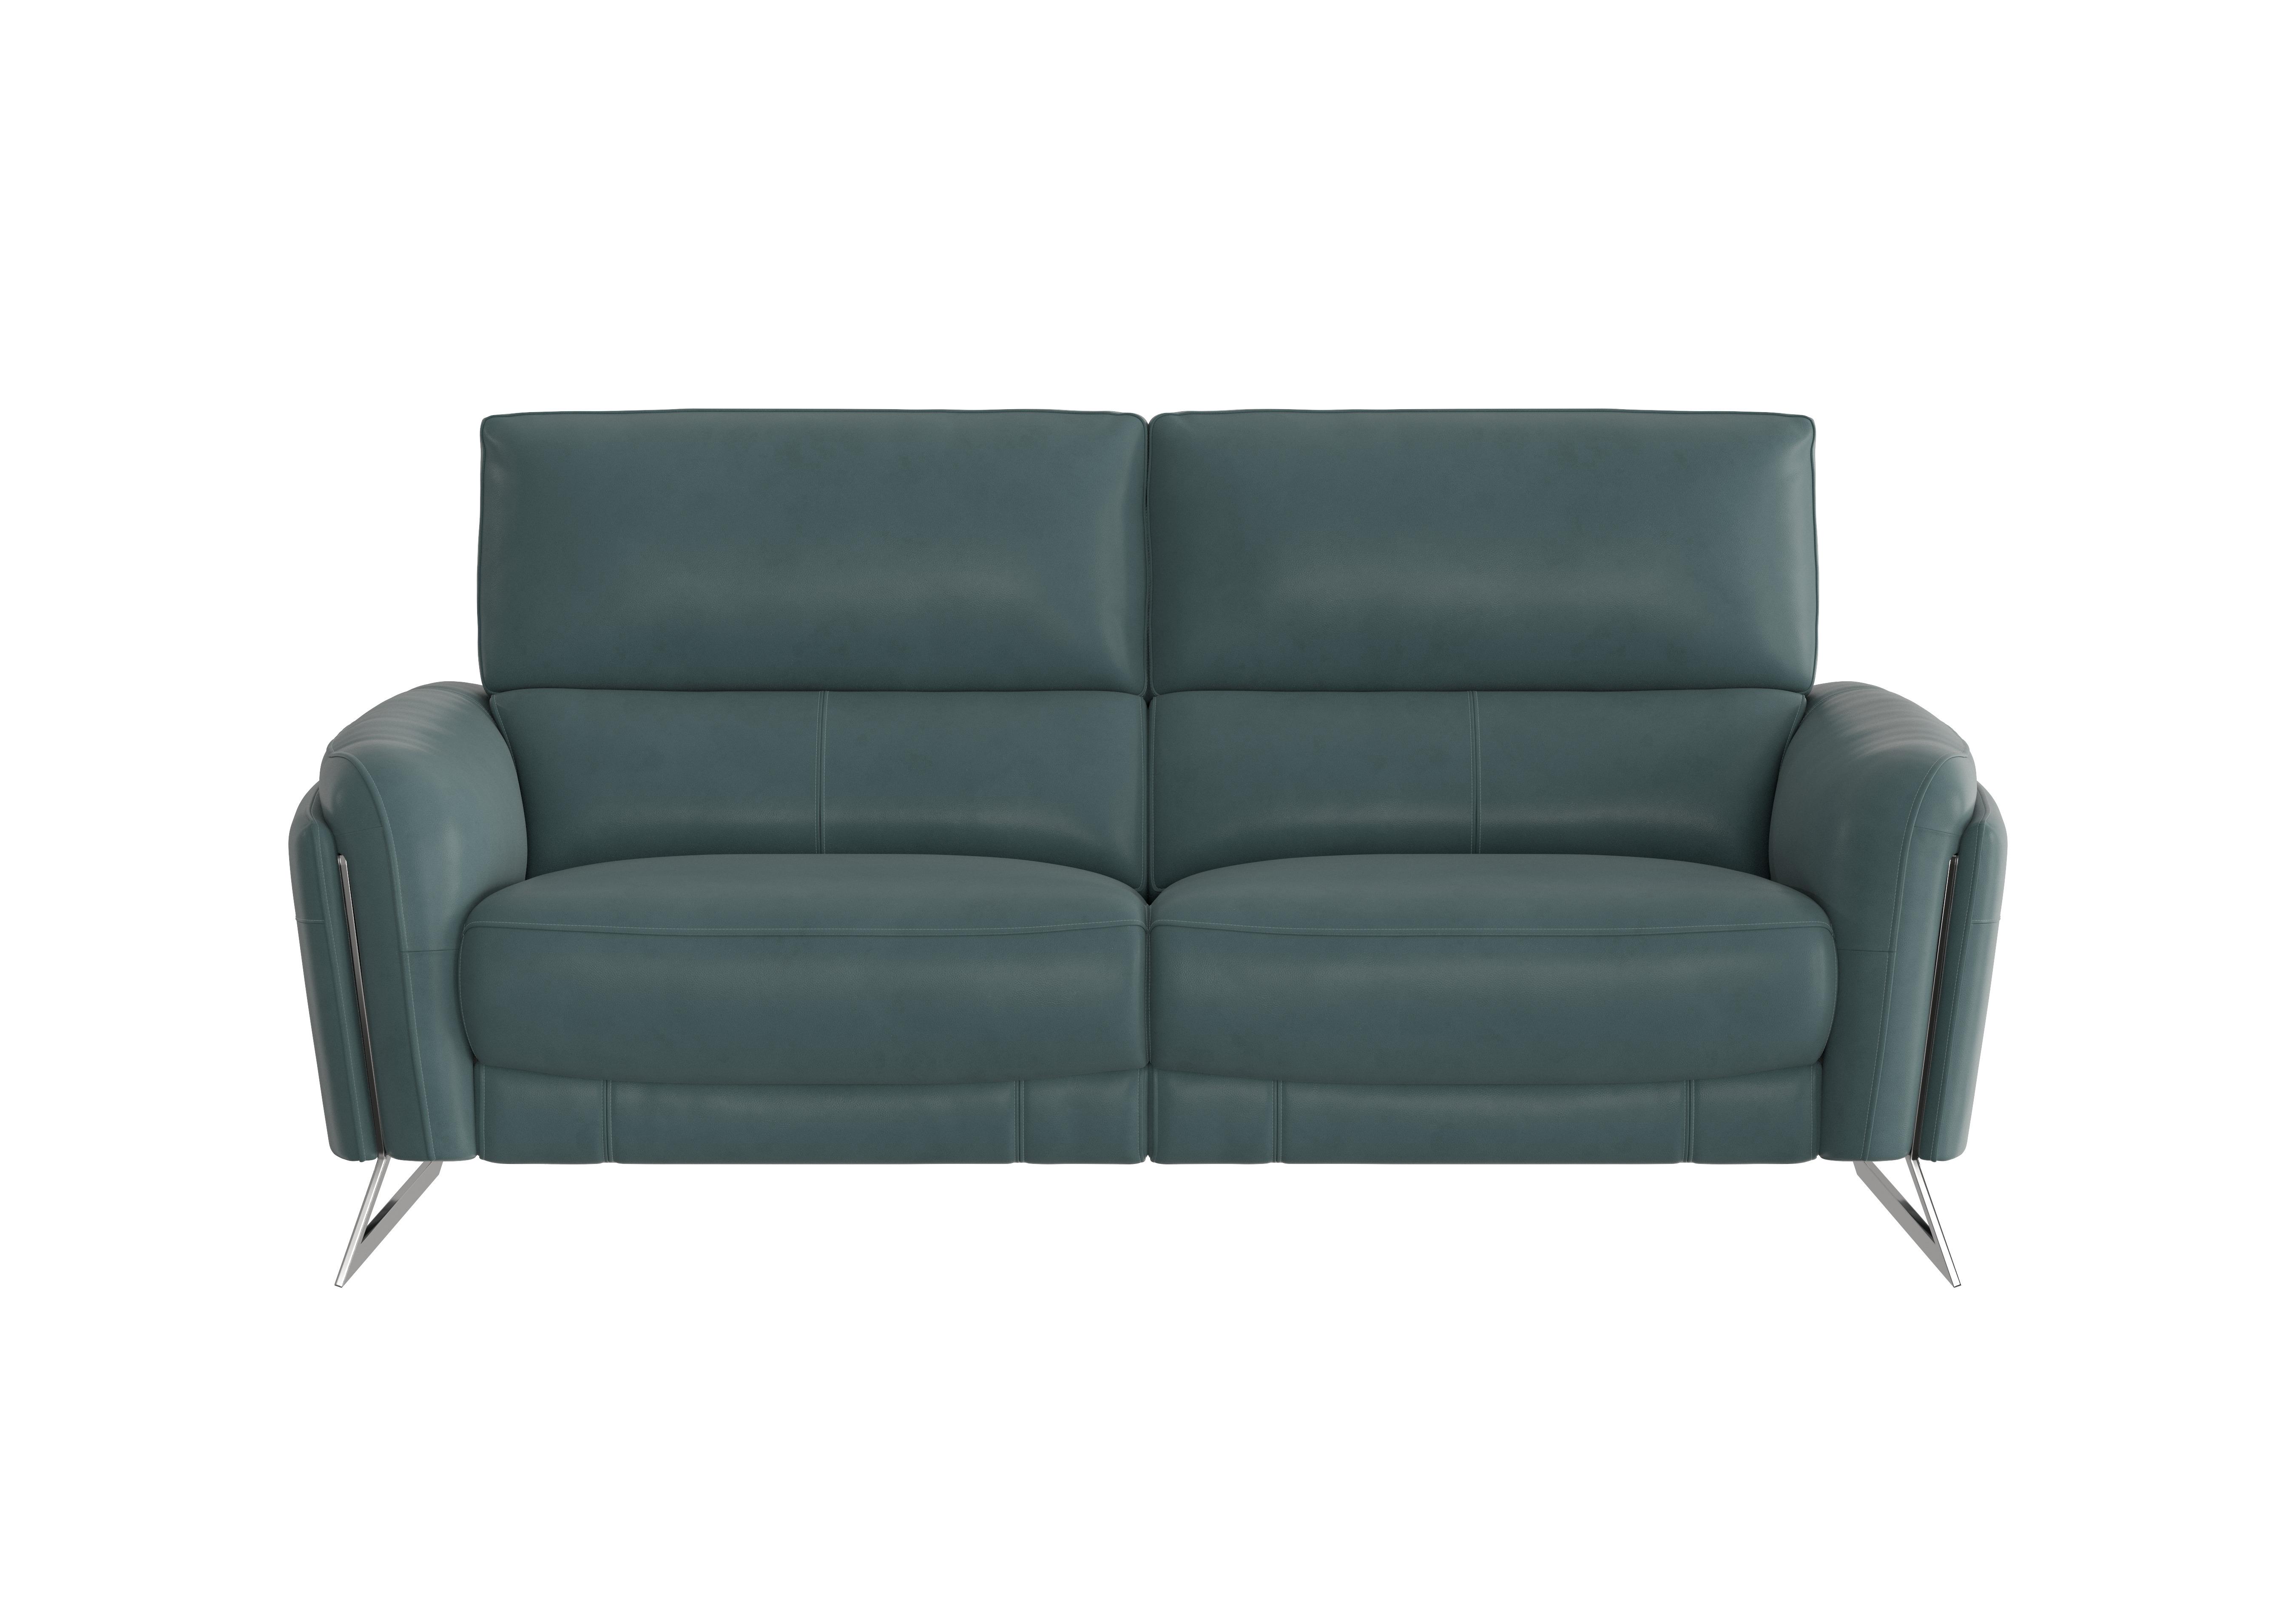 Amarilla 3 Seater Leather Sofa in Bv-301e Lake Green on Furniture Village